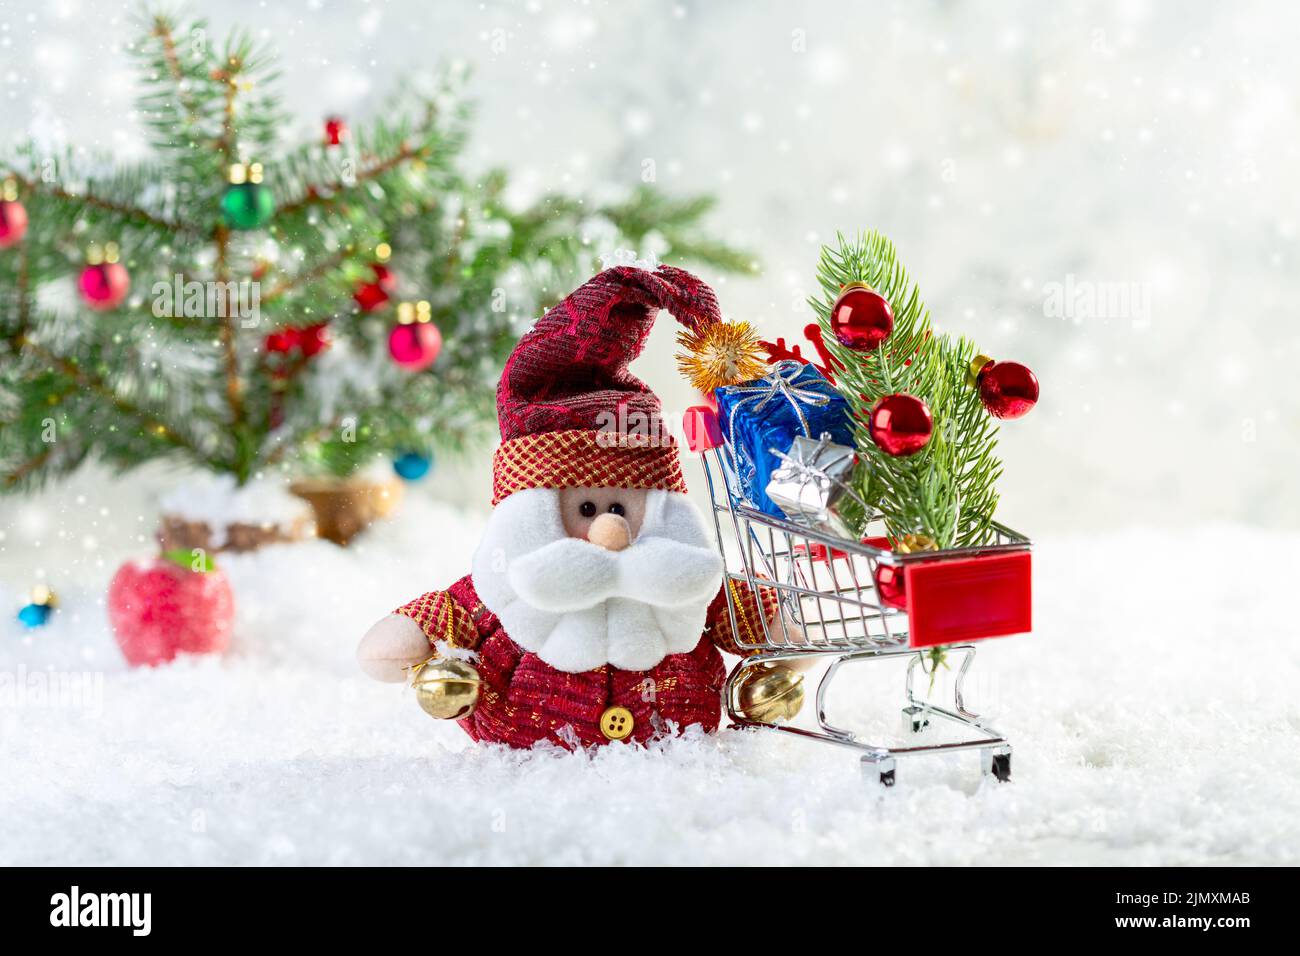 Christmas Santa Claus with shopping cart. Christmas composition. Stock Photo